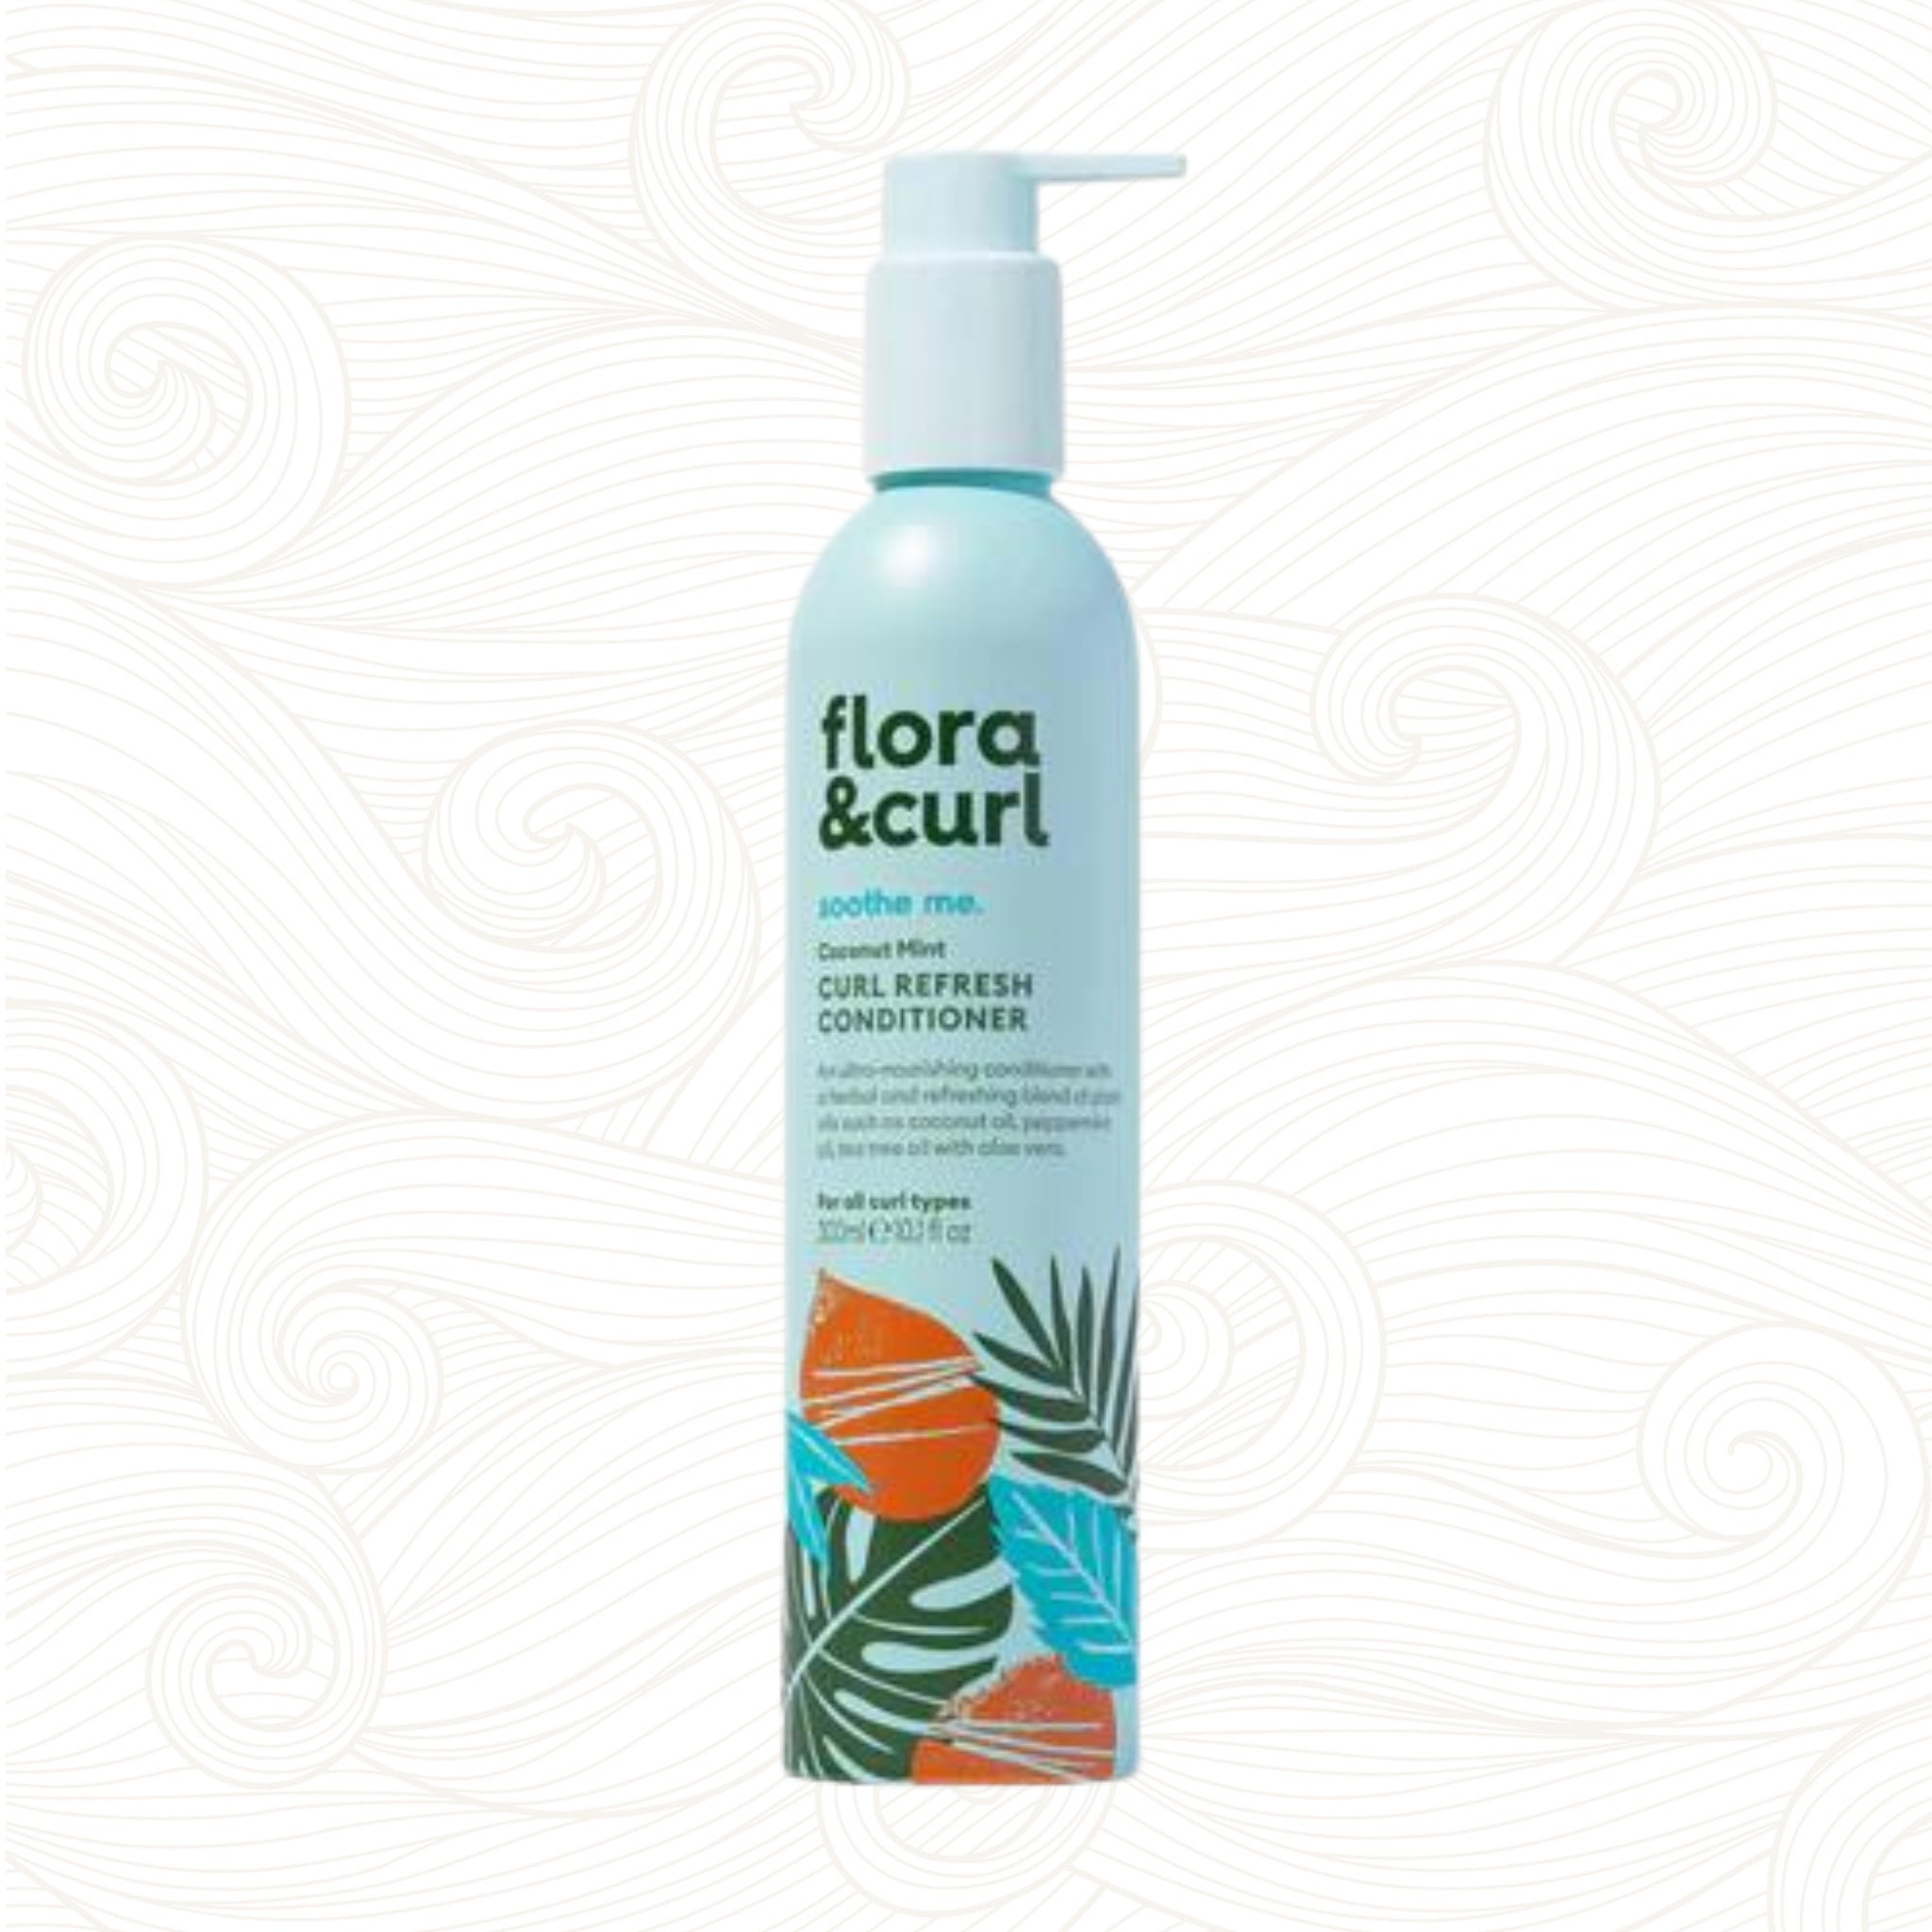 Flora & Curl | Coconut Mint Curl Refresh Conditioner /300ml